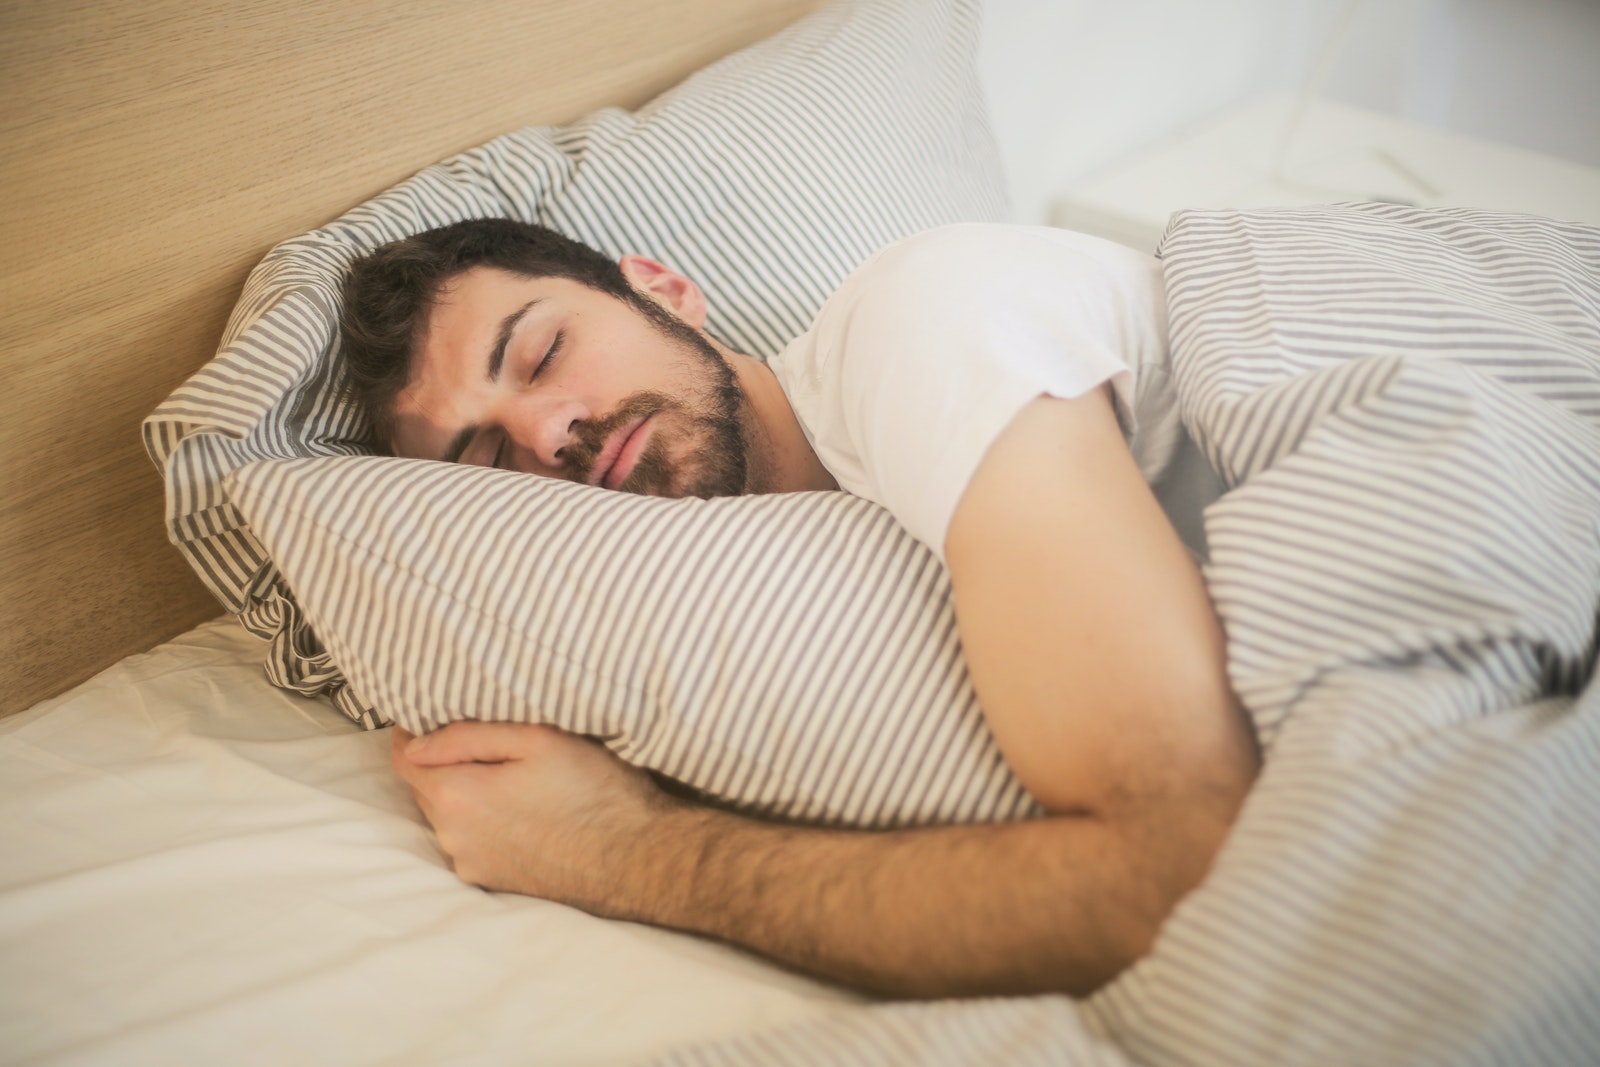 The Most Dangerous Energy Drinks sleep patterns